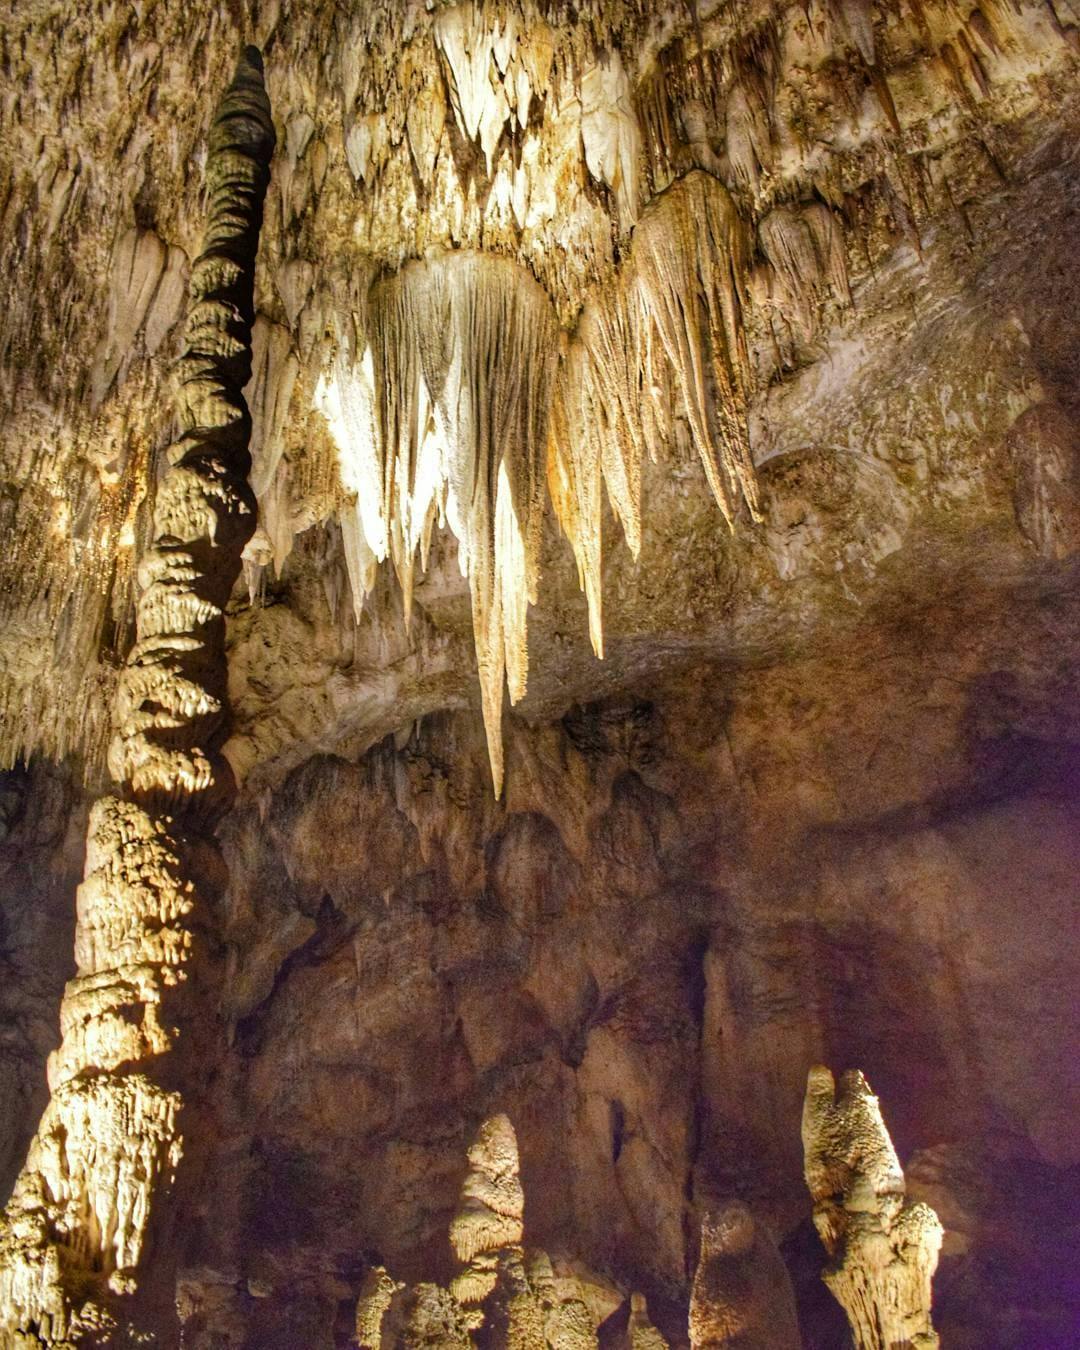 Stalactite chandelier in Carlsbad Caverns